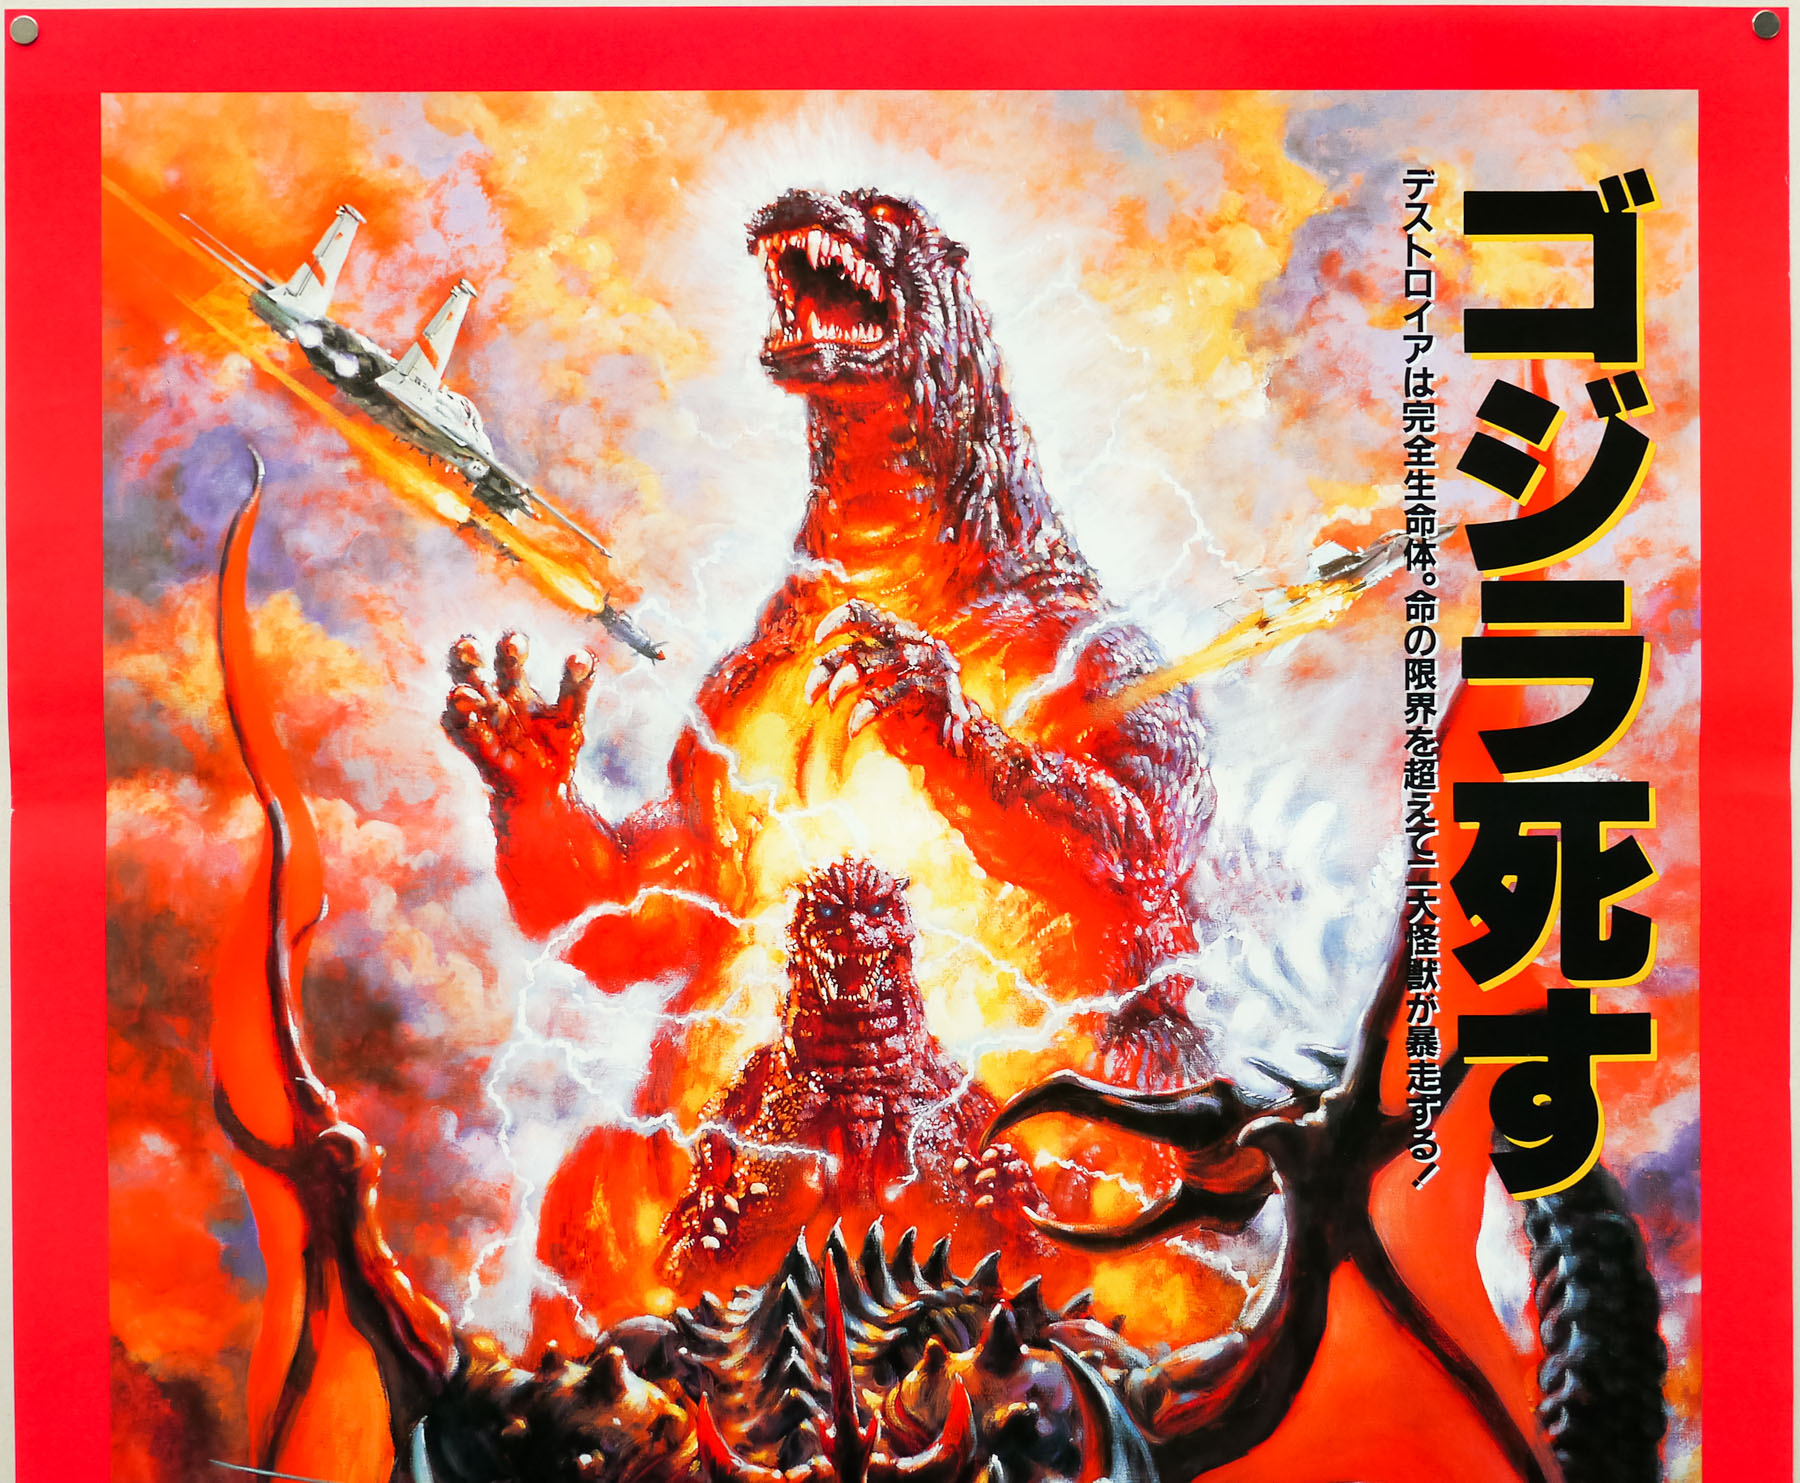 Godzilla Vs Destroyer Hot Movie Art Silk Canvas Poster 12x18 24x36 inch